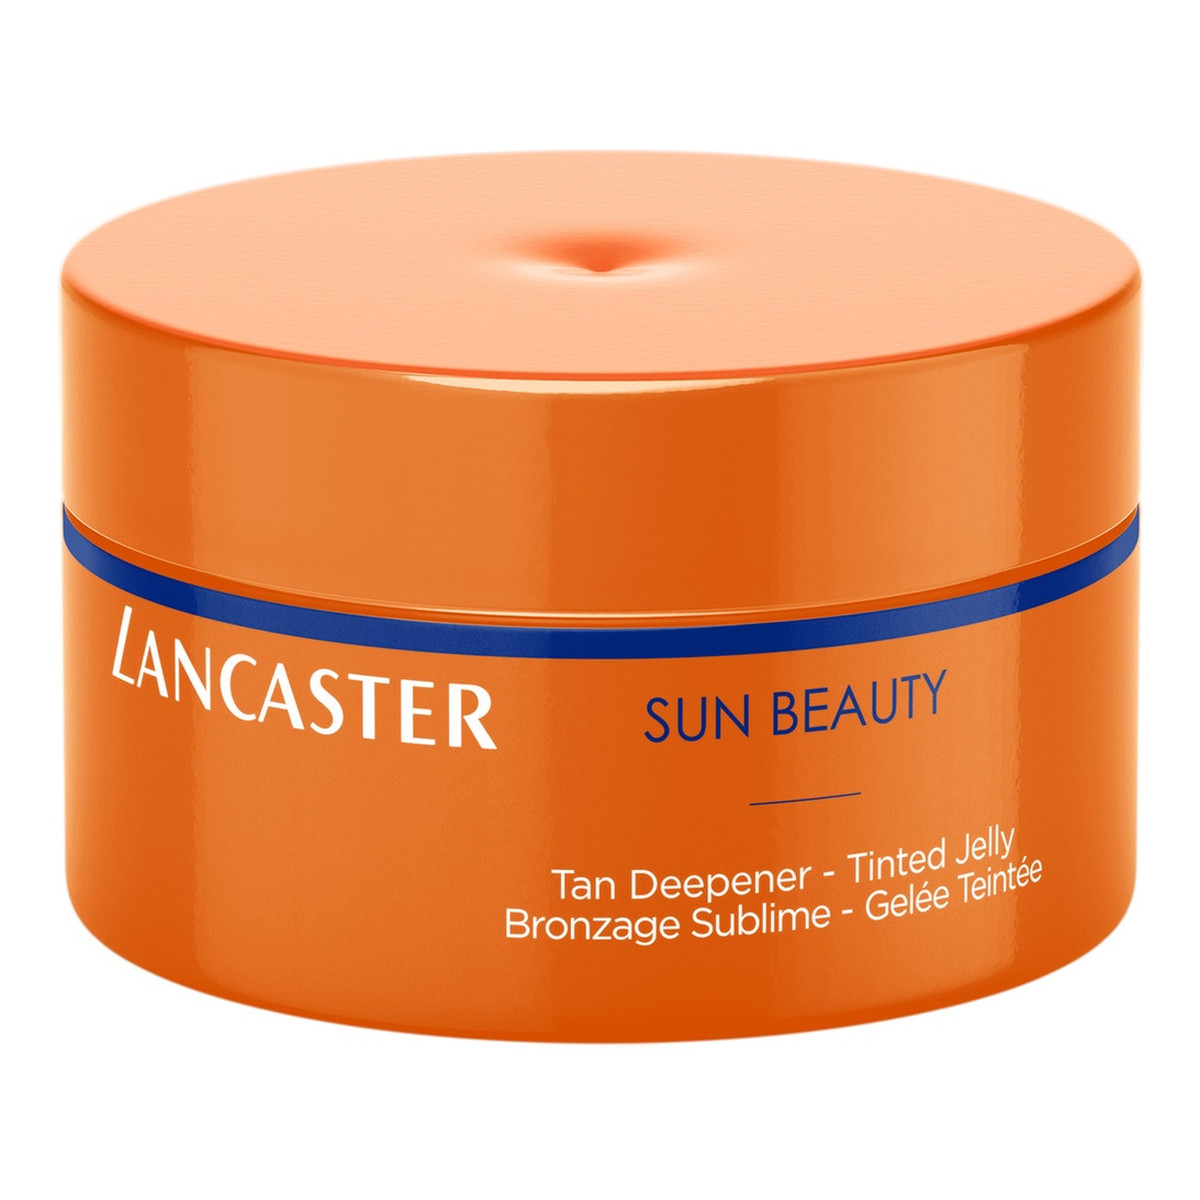 Lancaster Sun Beauty Tan Deepener Tinted Jelly żel tonujący podkreślający opaleniznę 200ml